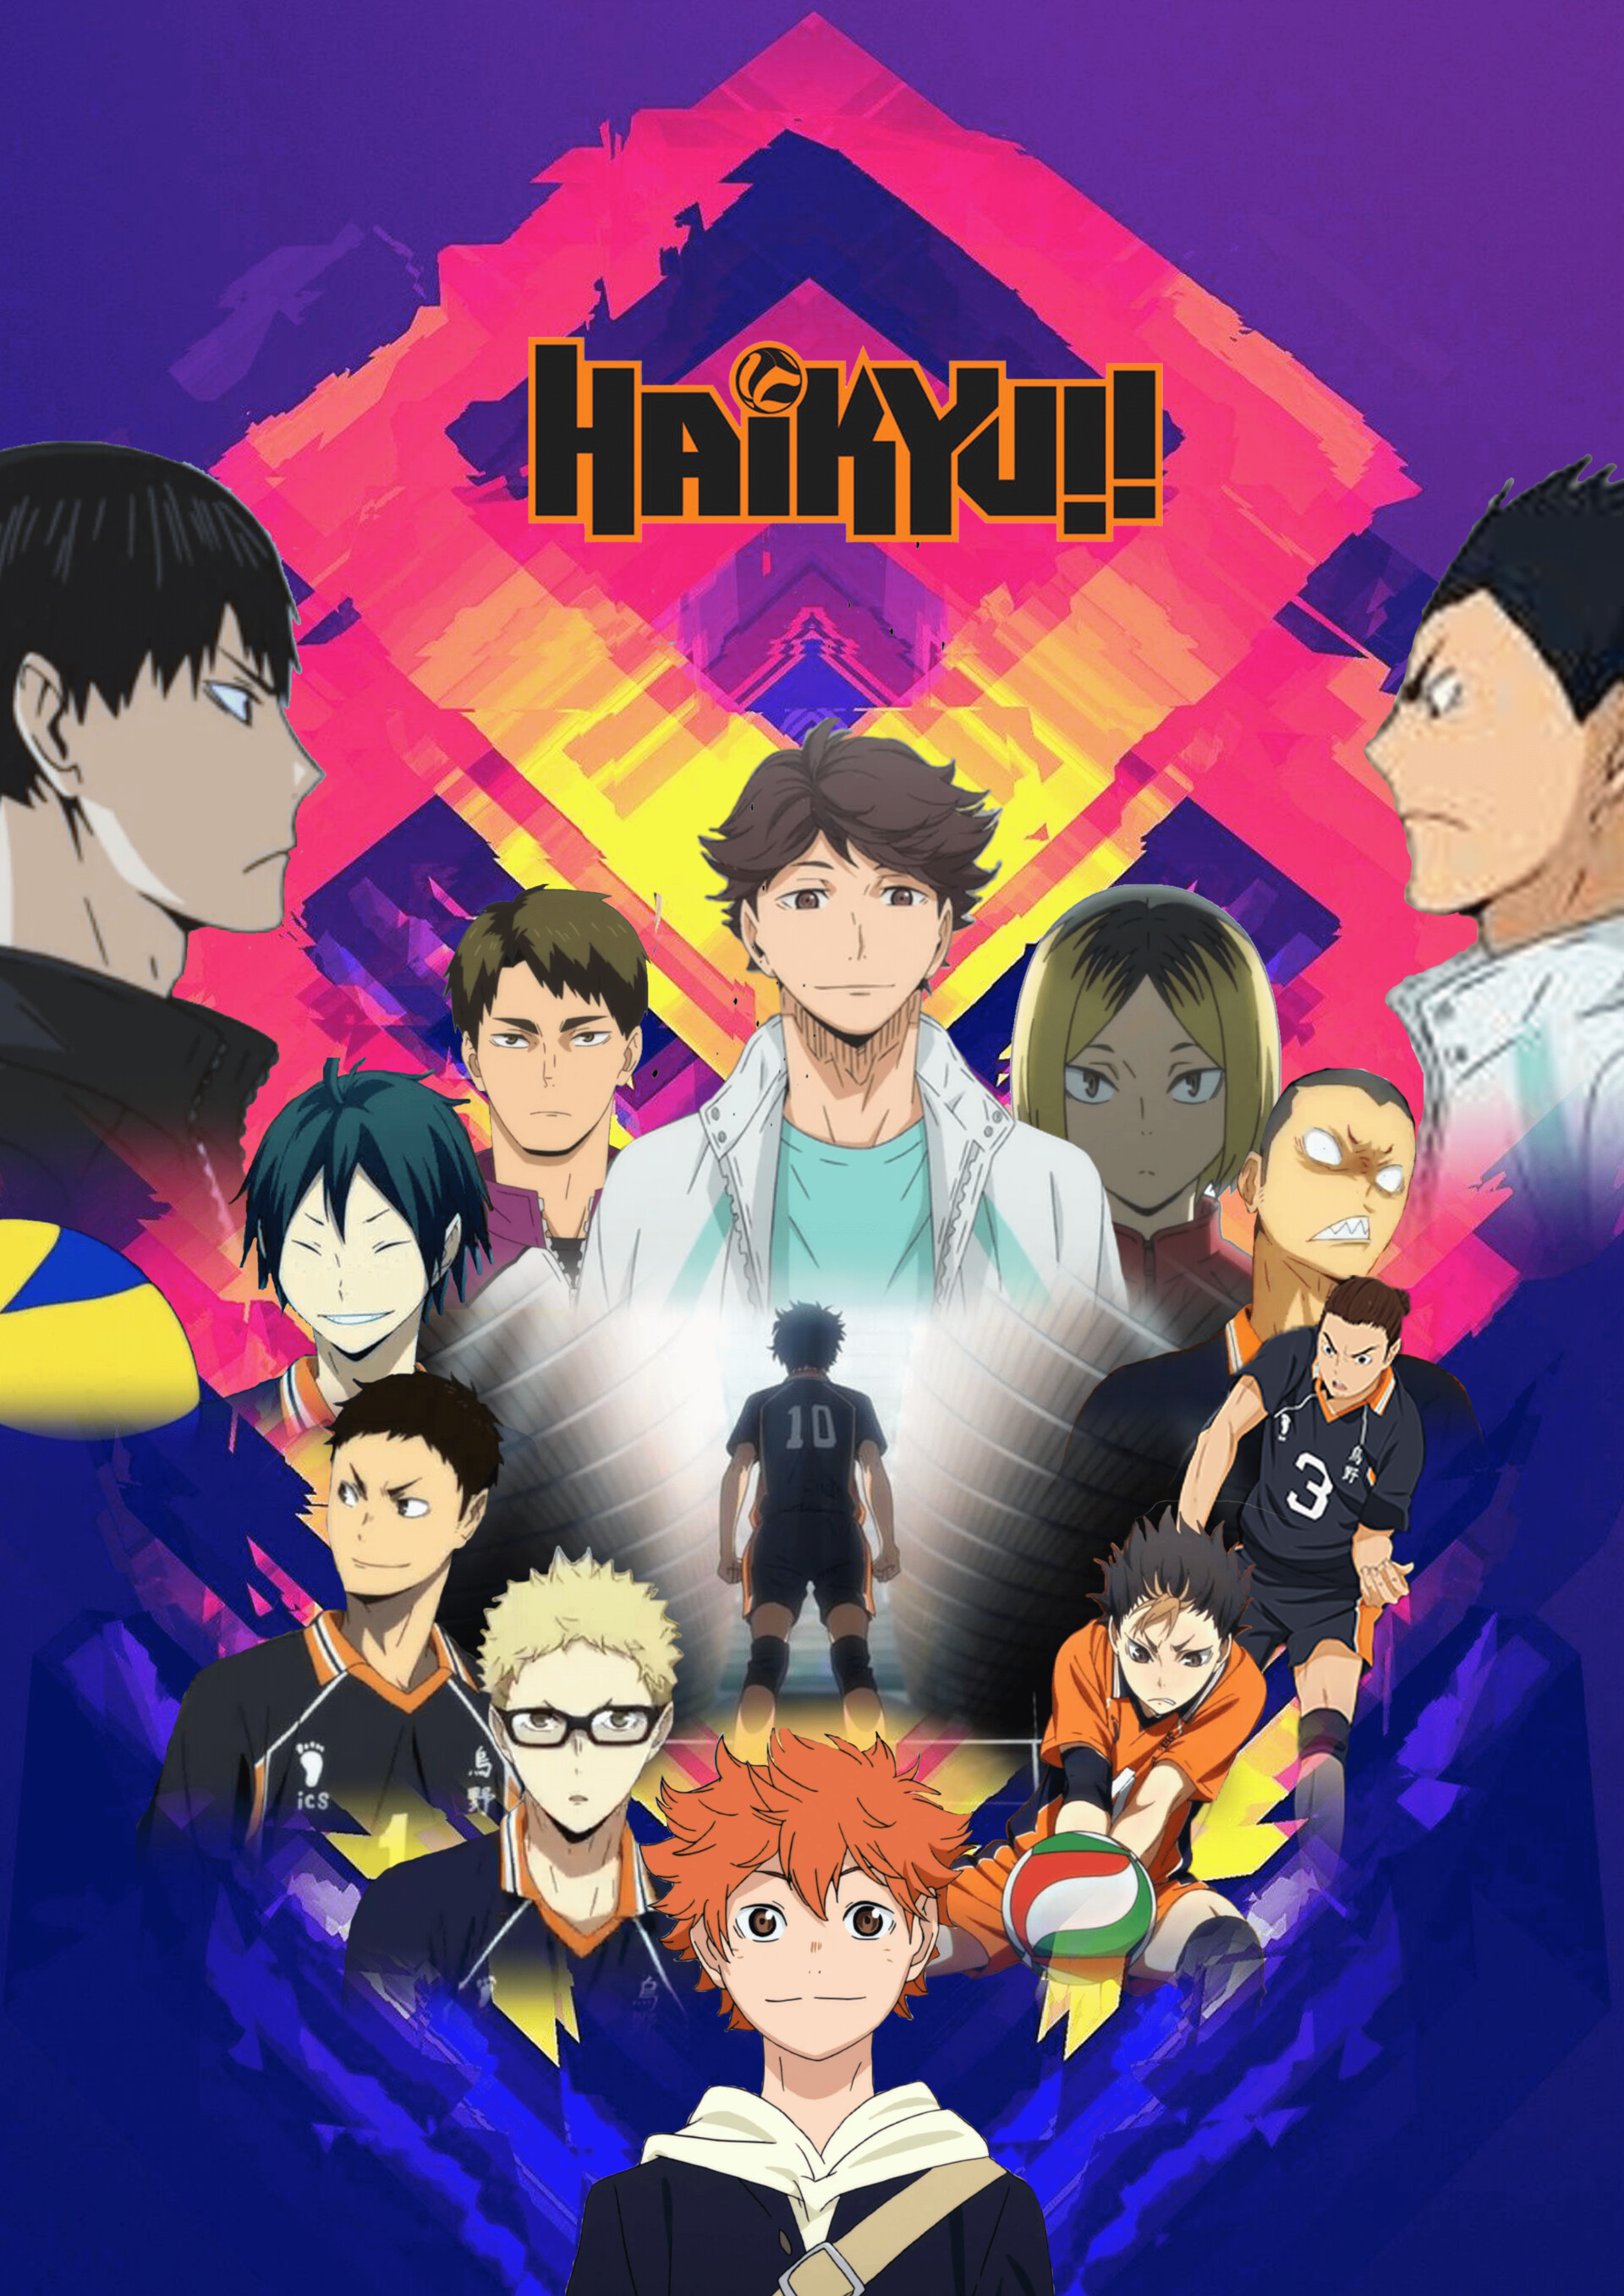 ArtStation - Haikyu anime poster